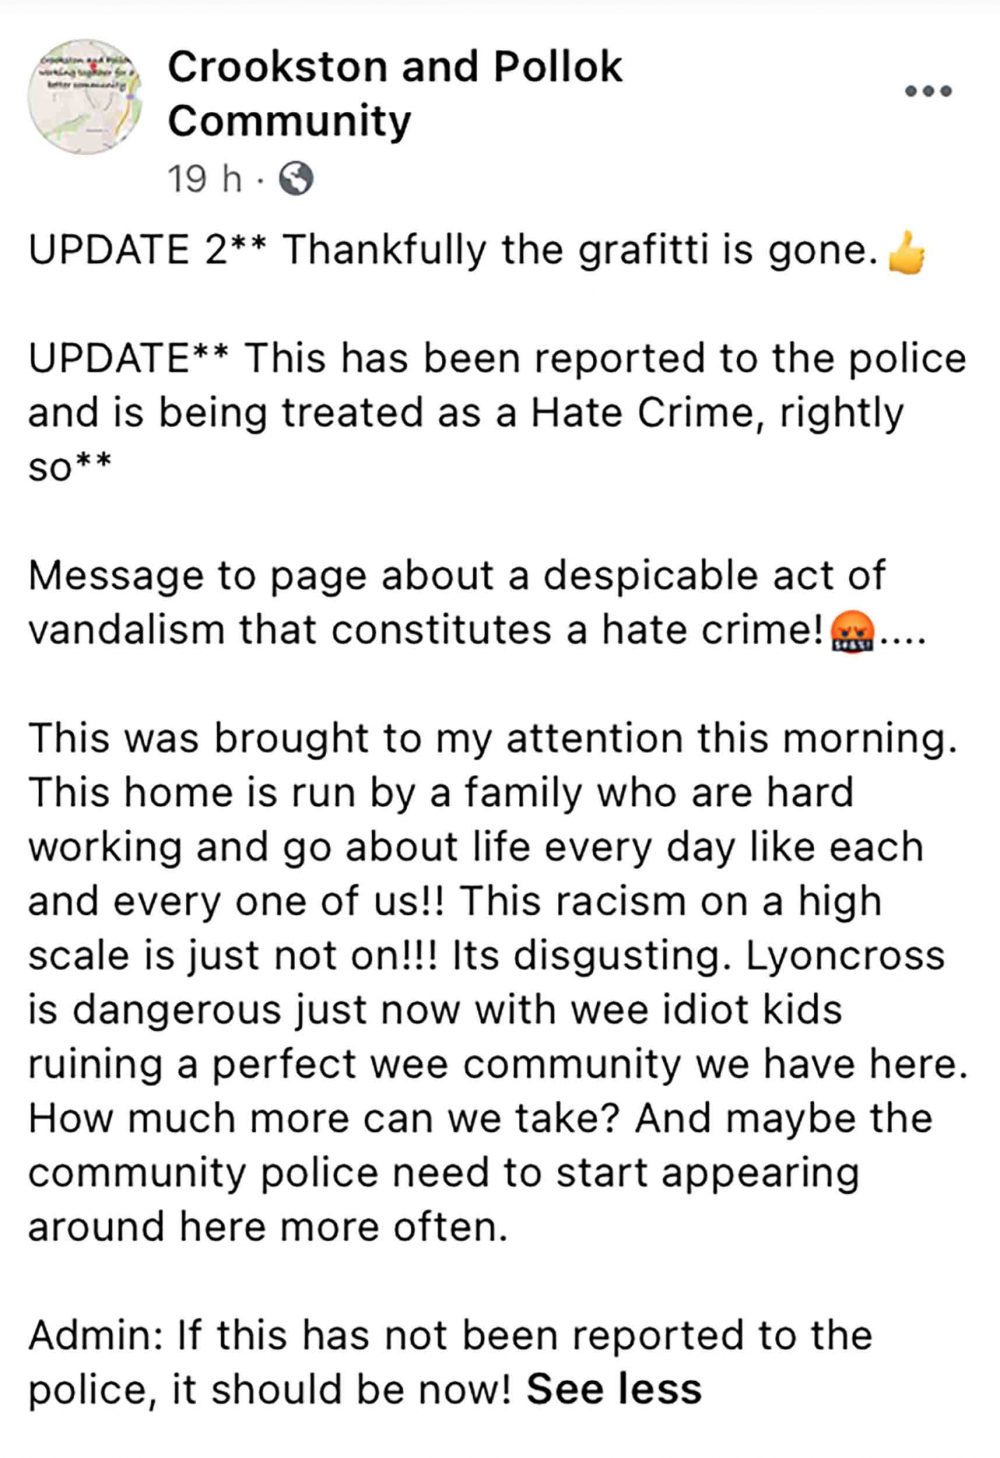 Facebook community page Crookston and Pollok Community post about Graffiti| Crime news UK